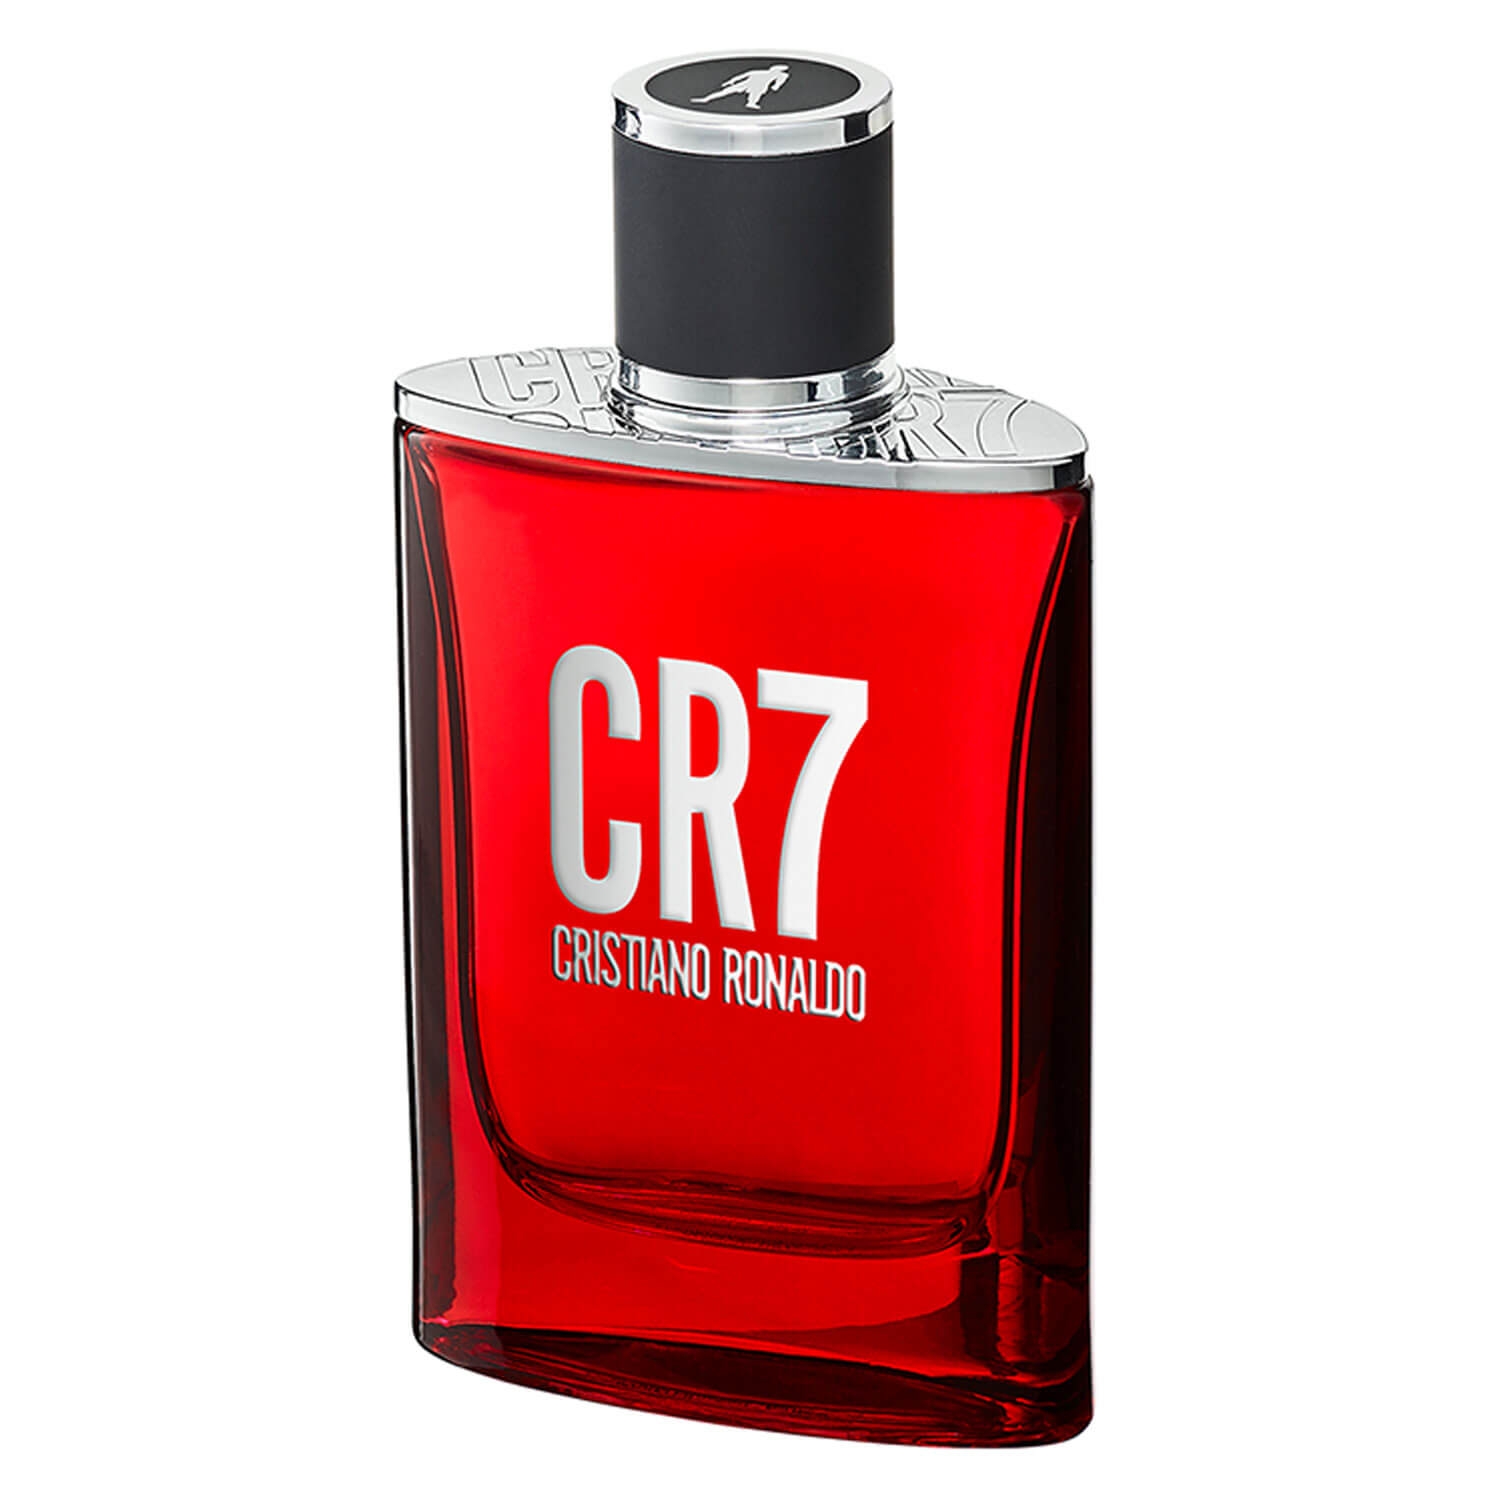 Product image from CR7 Cristiano Ronaldo - Eau de Toilette